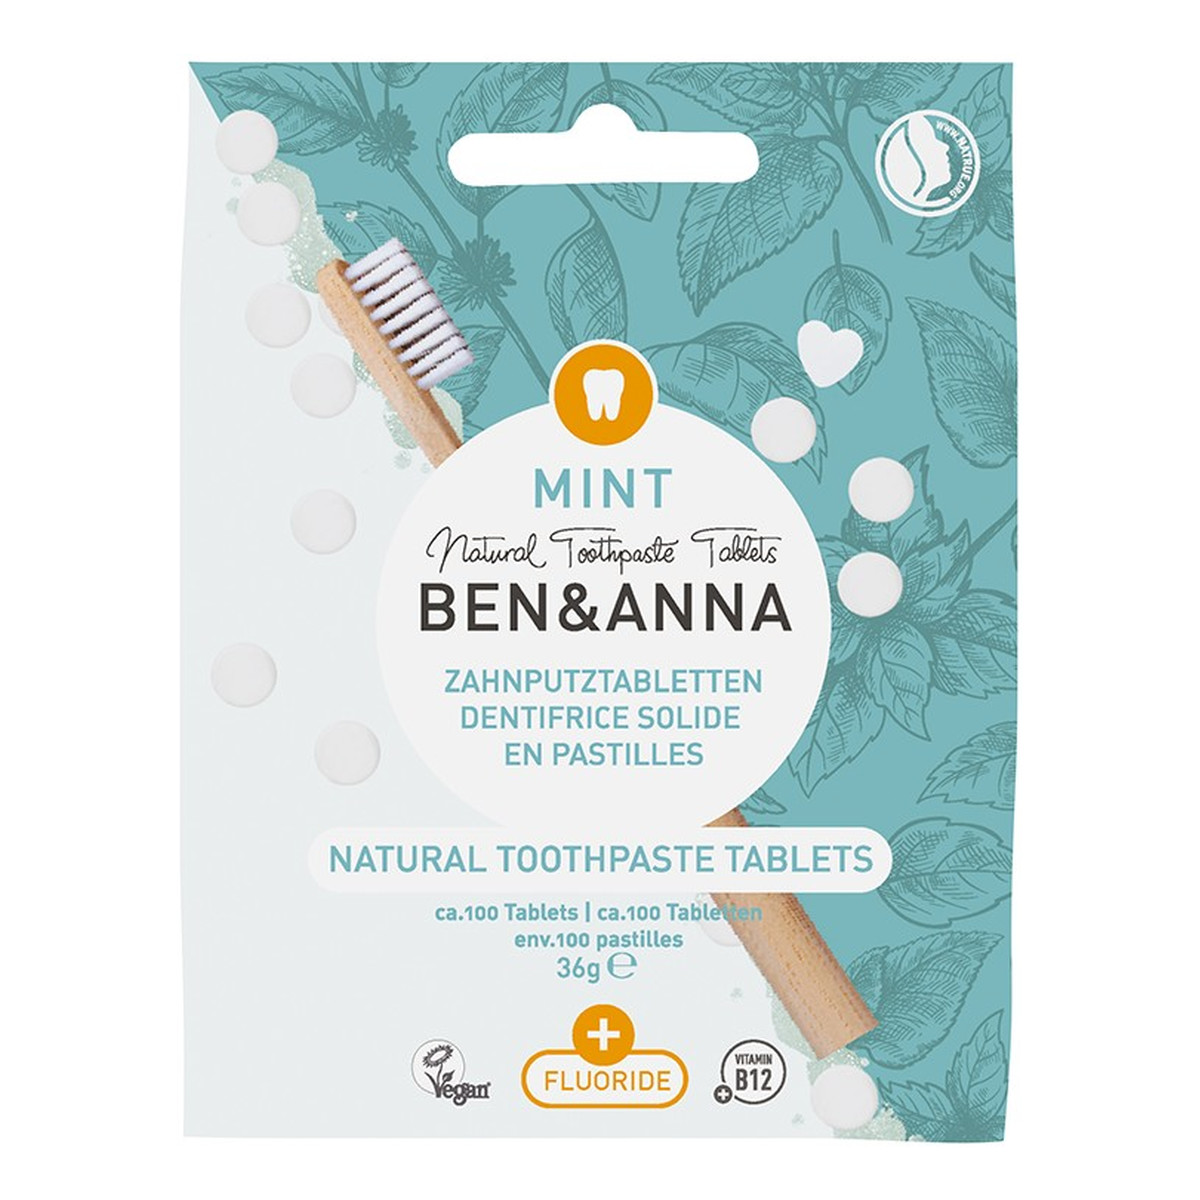 Ben&Anna Natural toothpaste tablets naturalne tabletki do mycia zębów z fluorem 36g